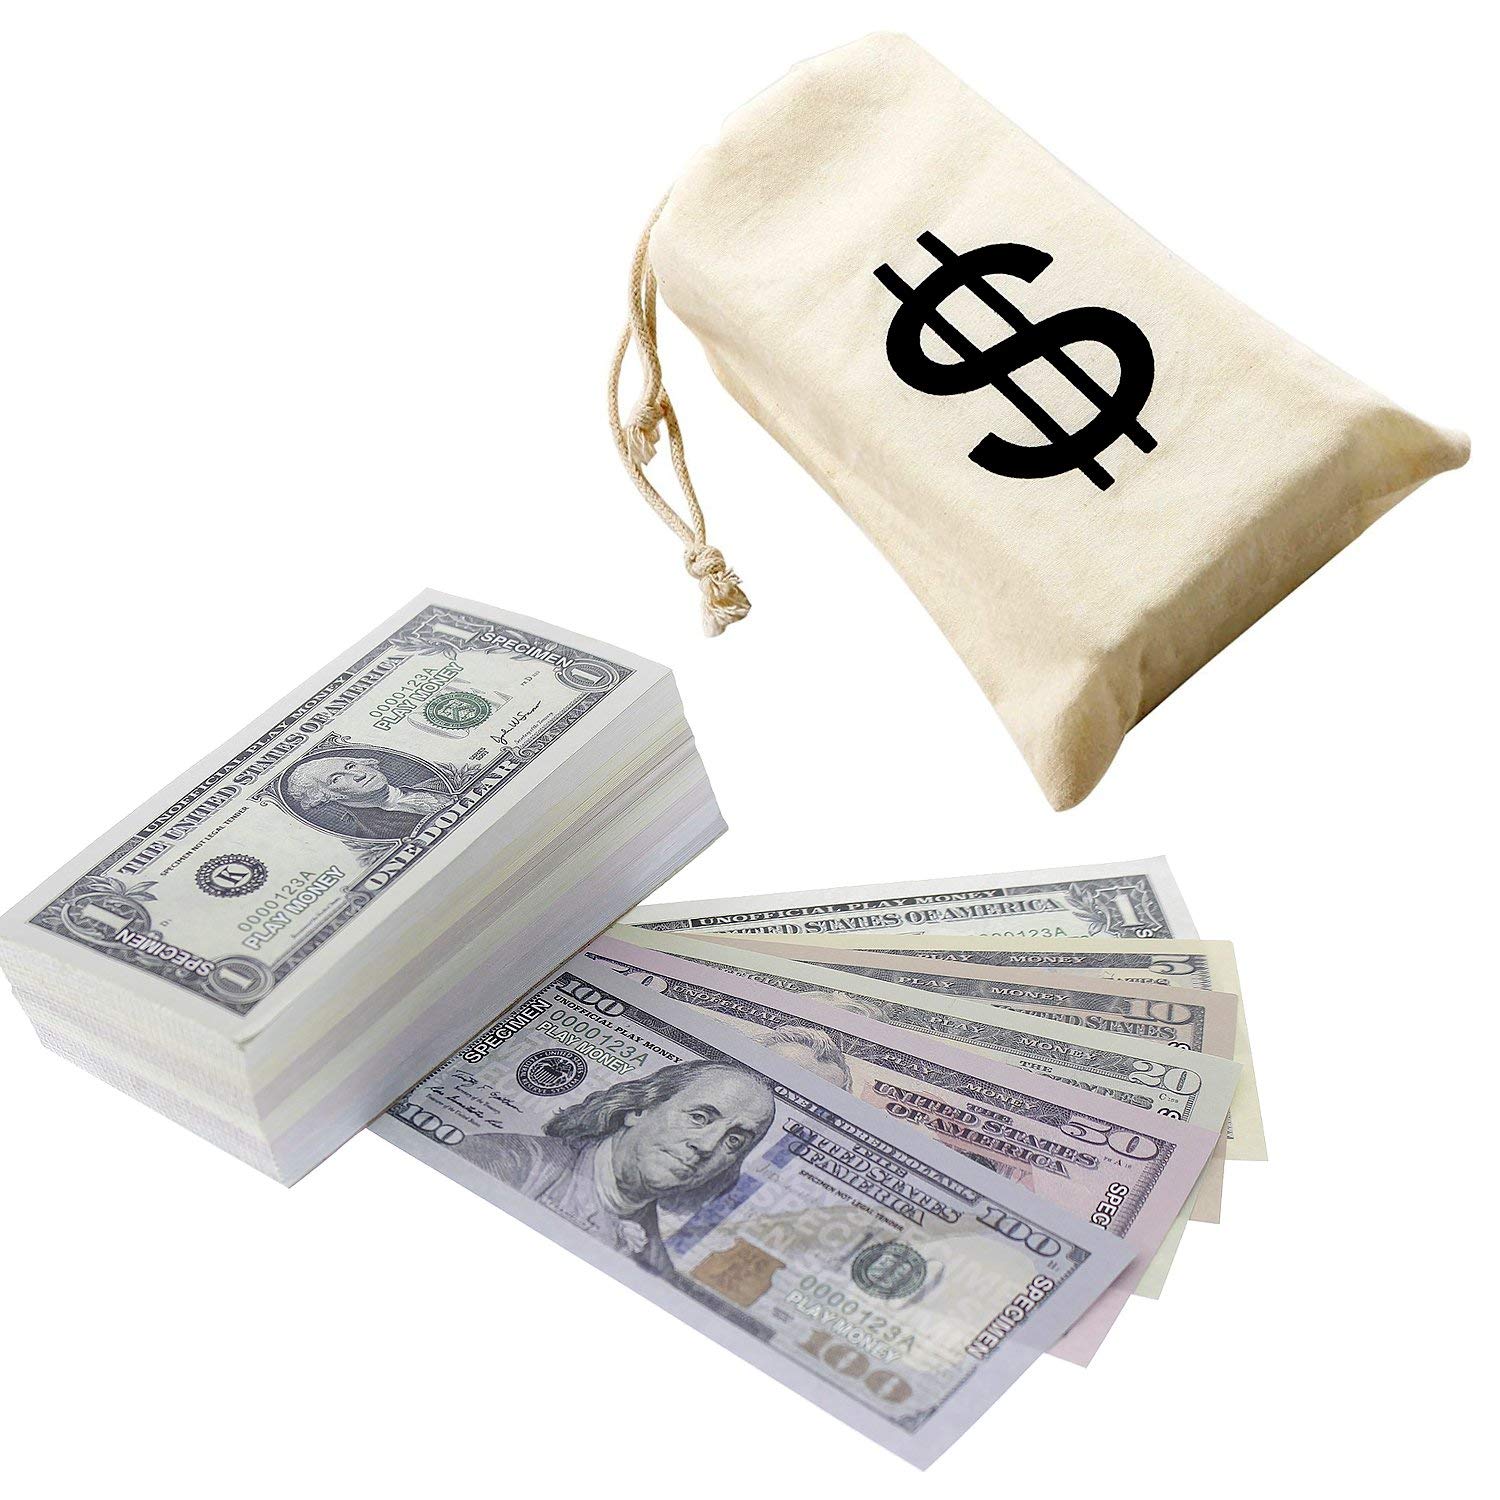 Amazon.com: $9300 in Play Money - Pretend Dollar Bills - Realistic ...